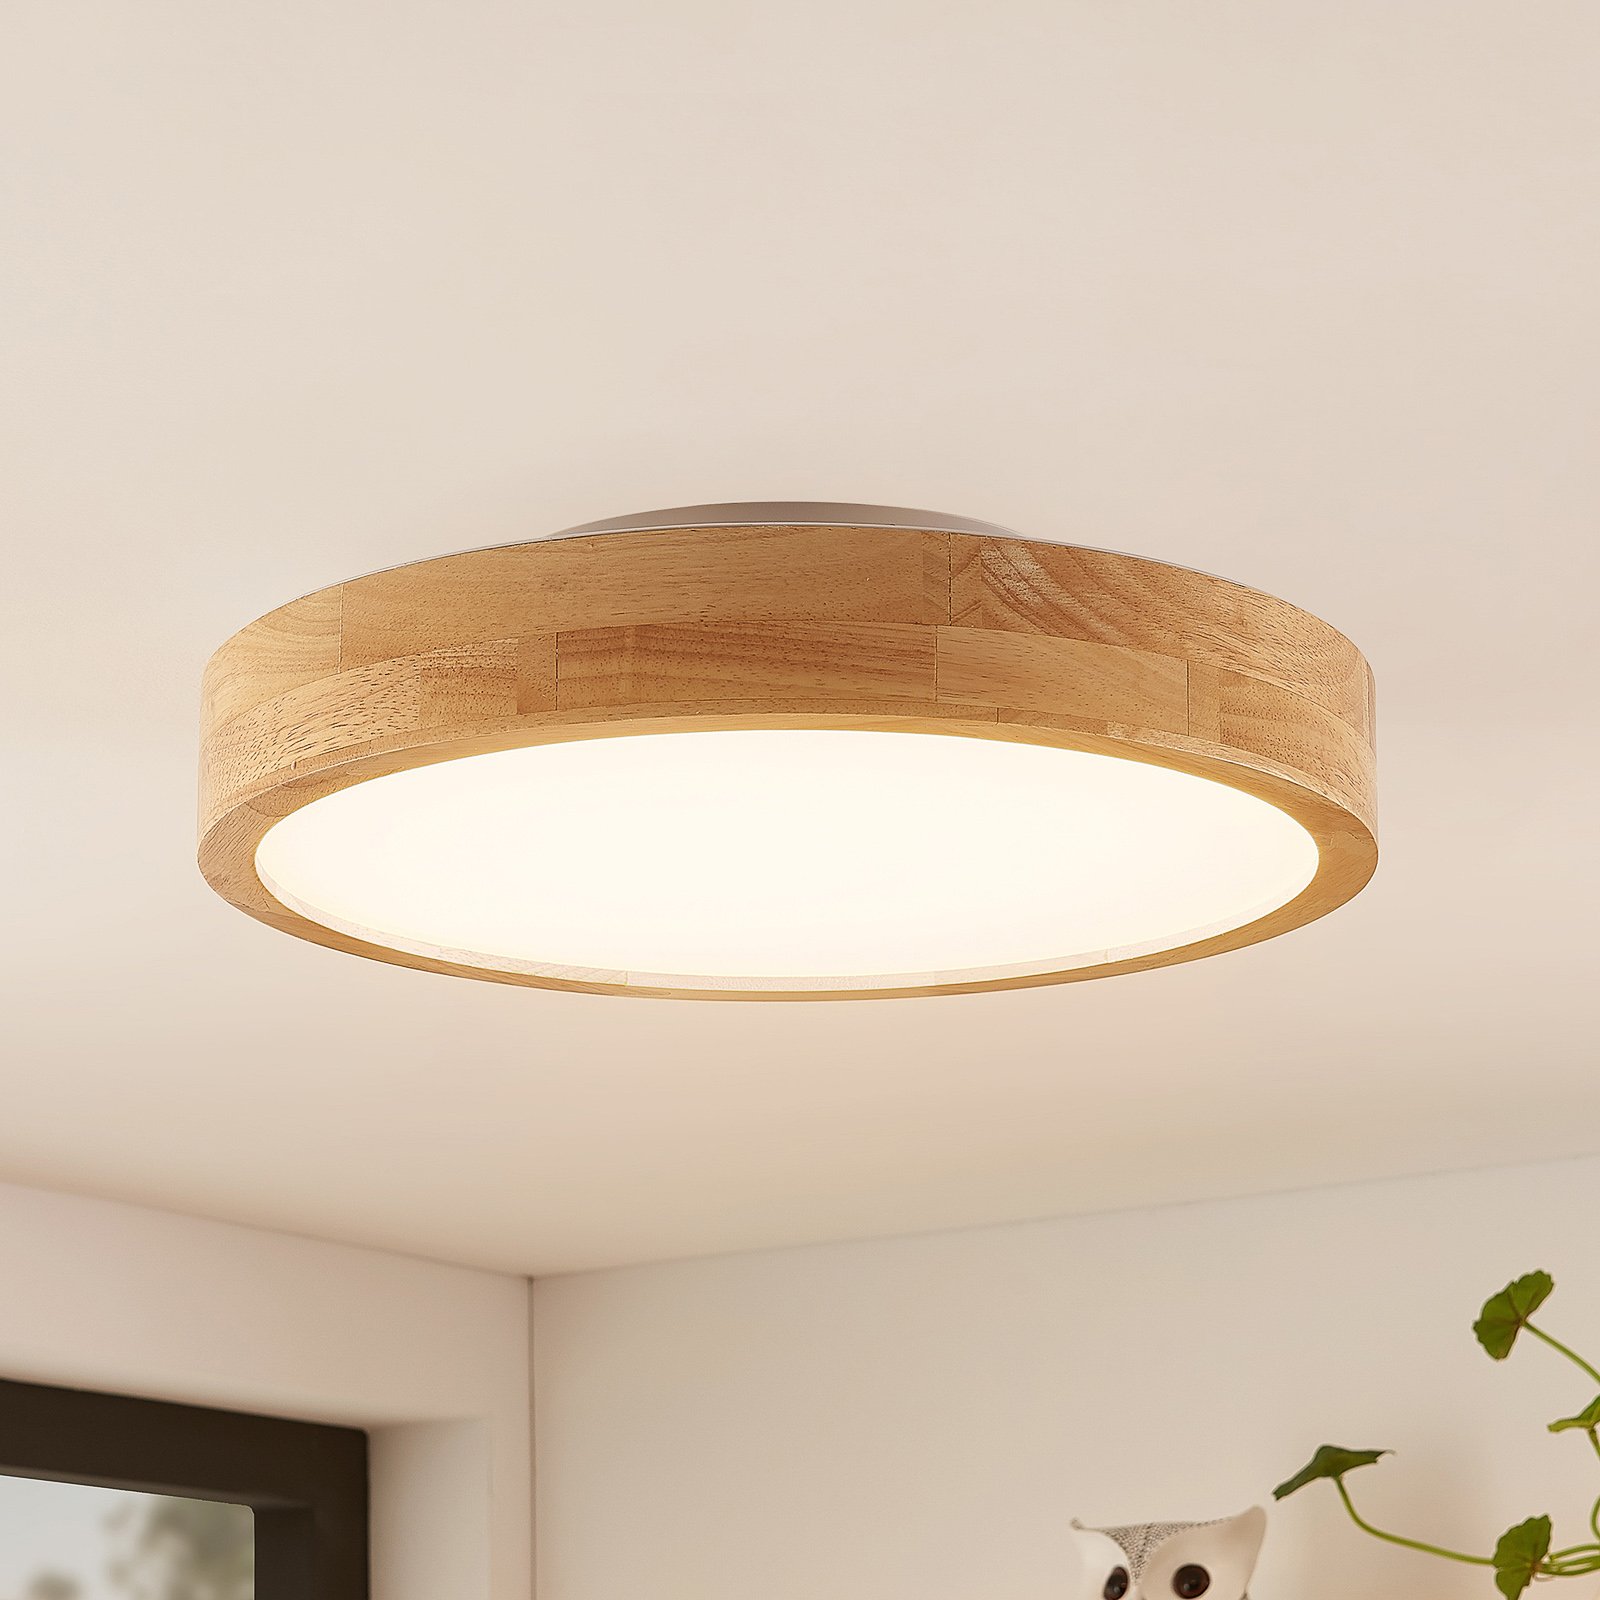 Echt niet influenza uitzondering Lindby Milada LED plafondlamp, hout eiken | Lampen24.be